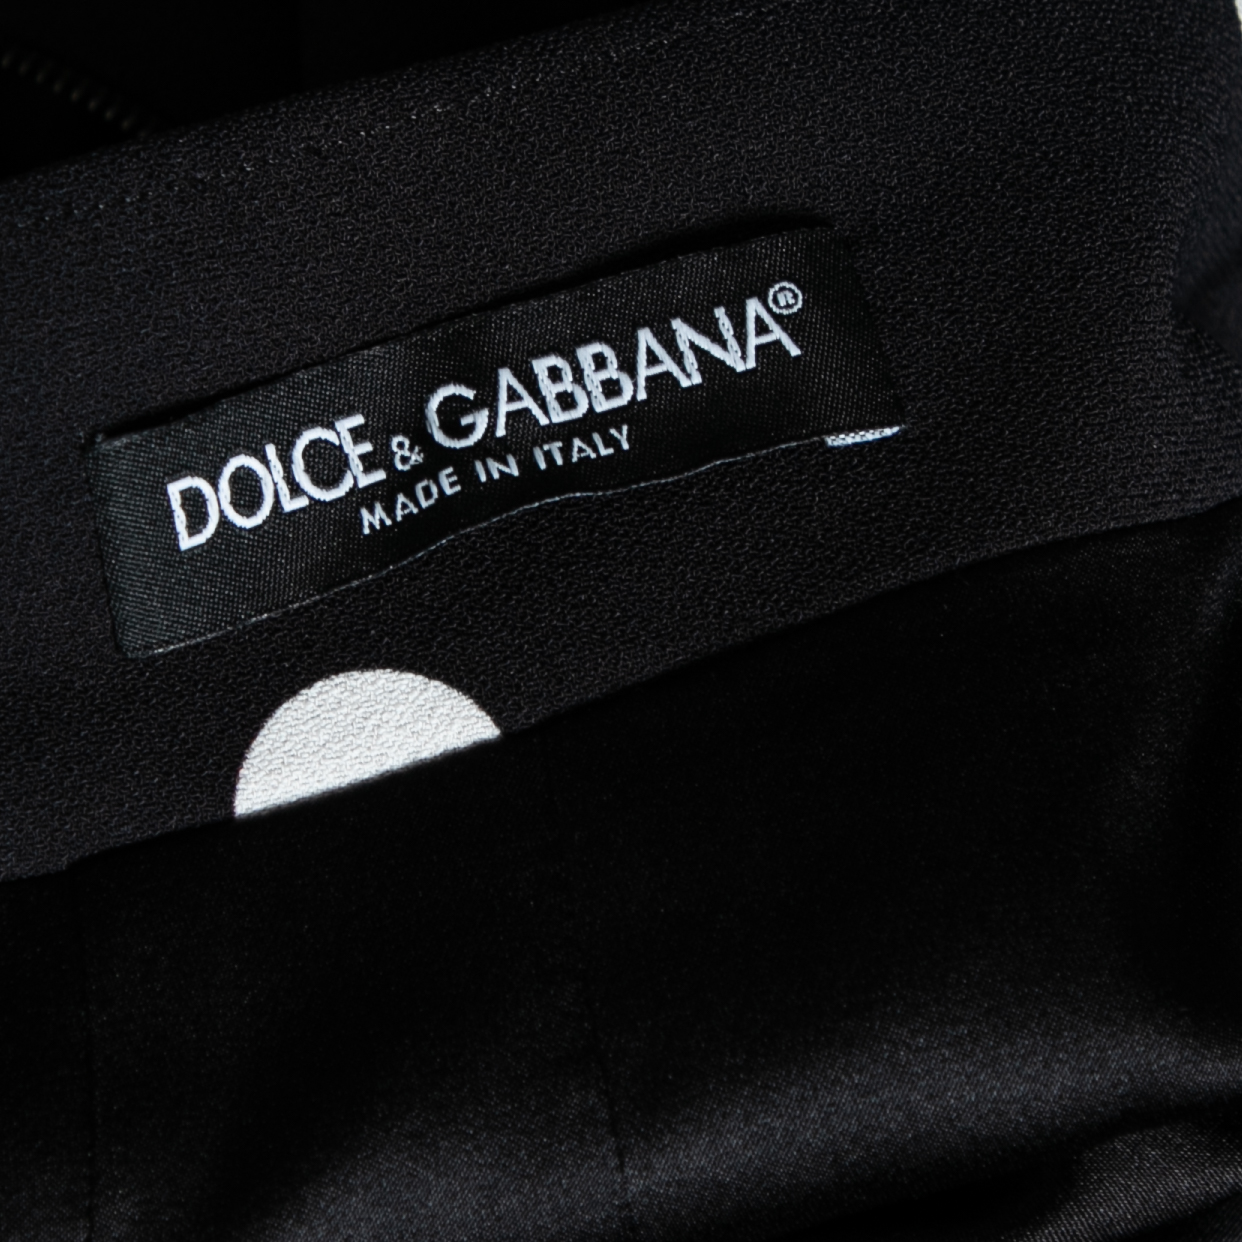 Dolce & Gabbana Black Polka Dotted Crepe Pencil Skirt M